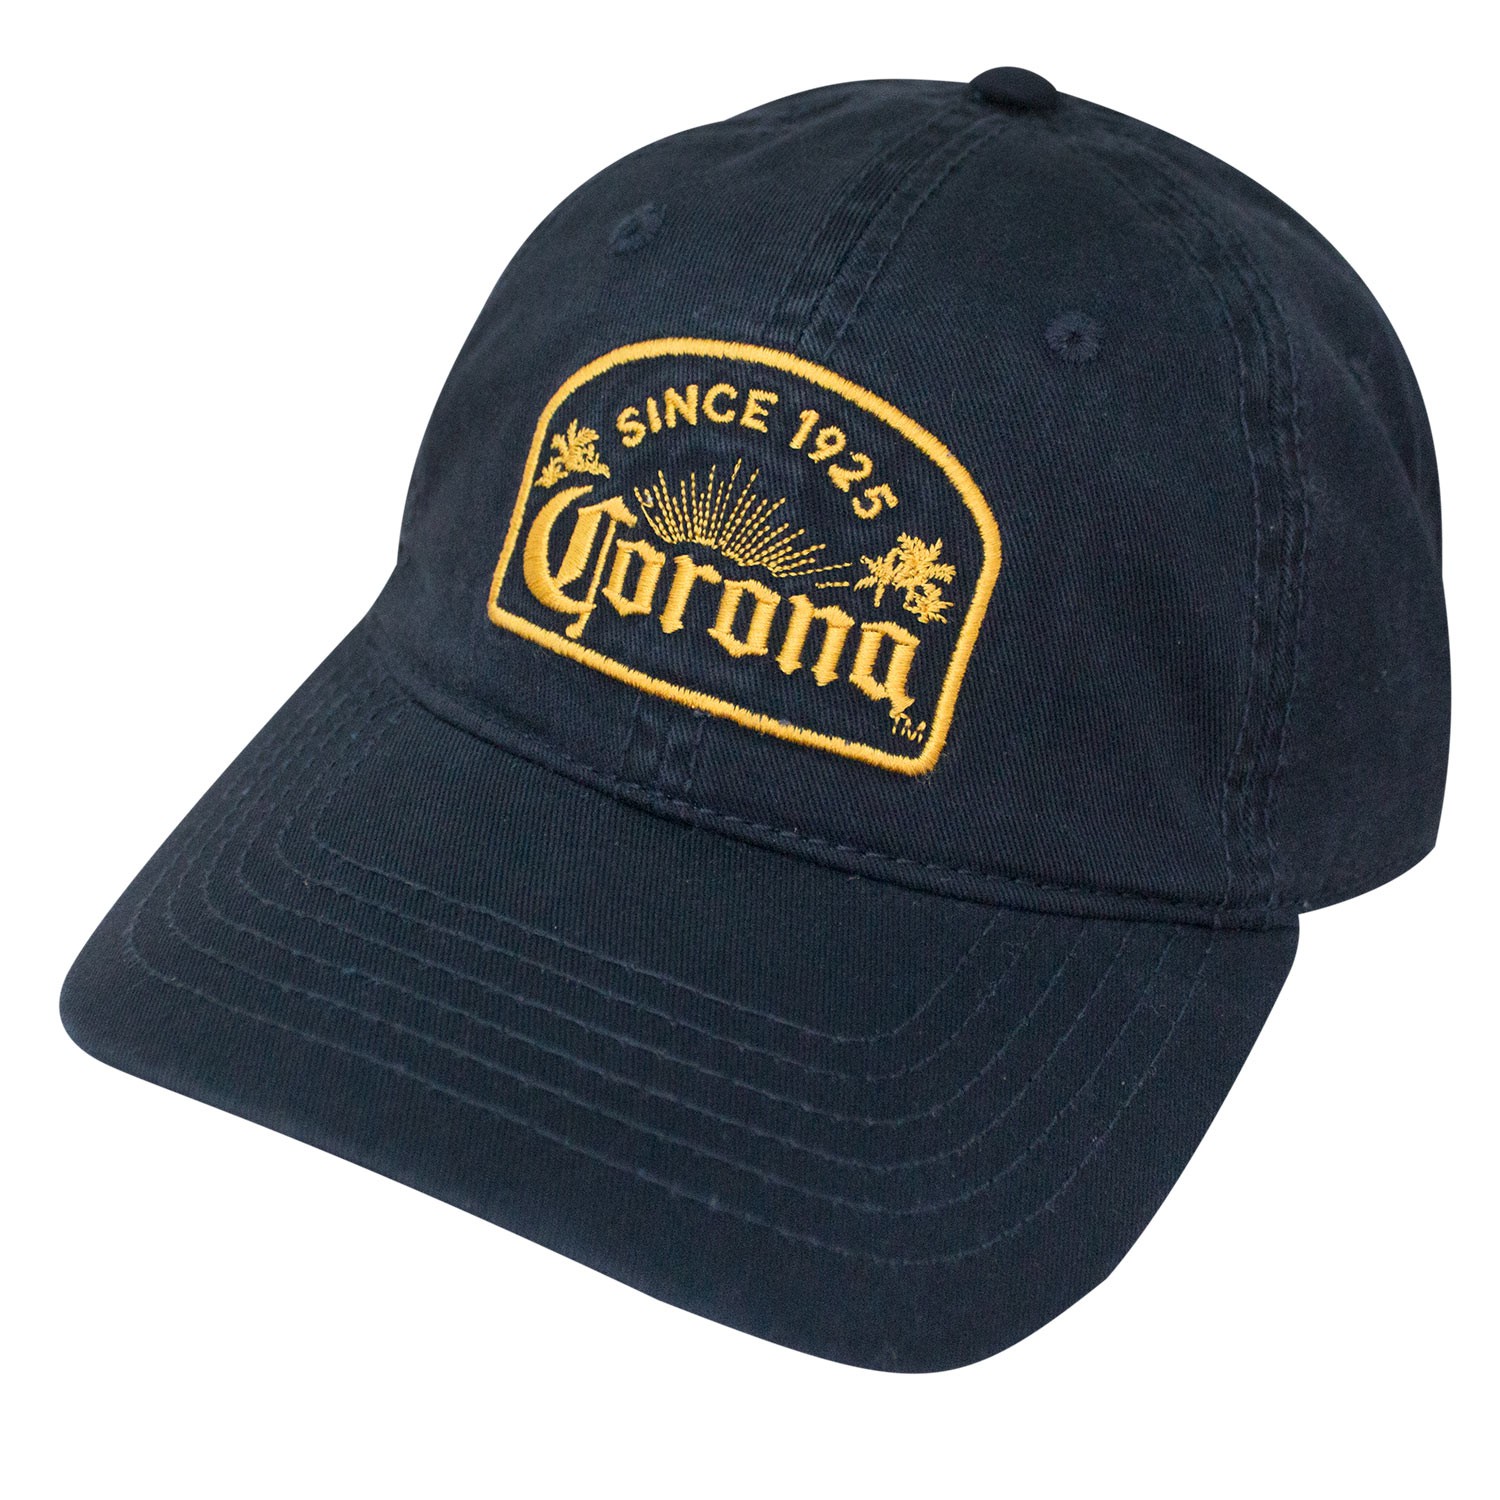 Corona Since 1925 Navy Blue Hat